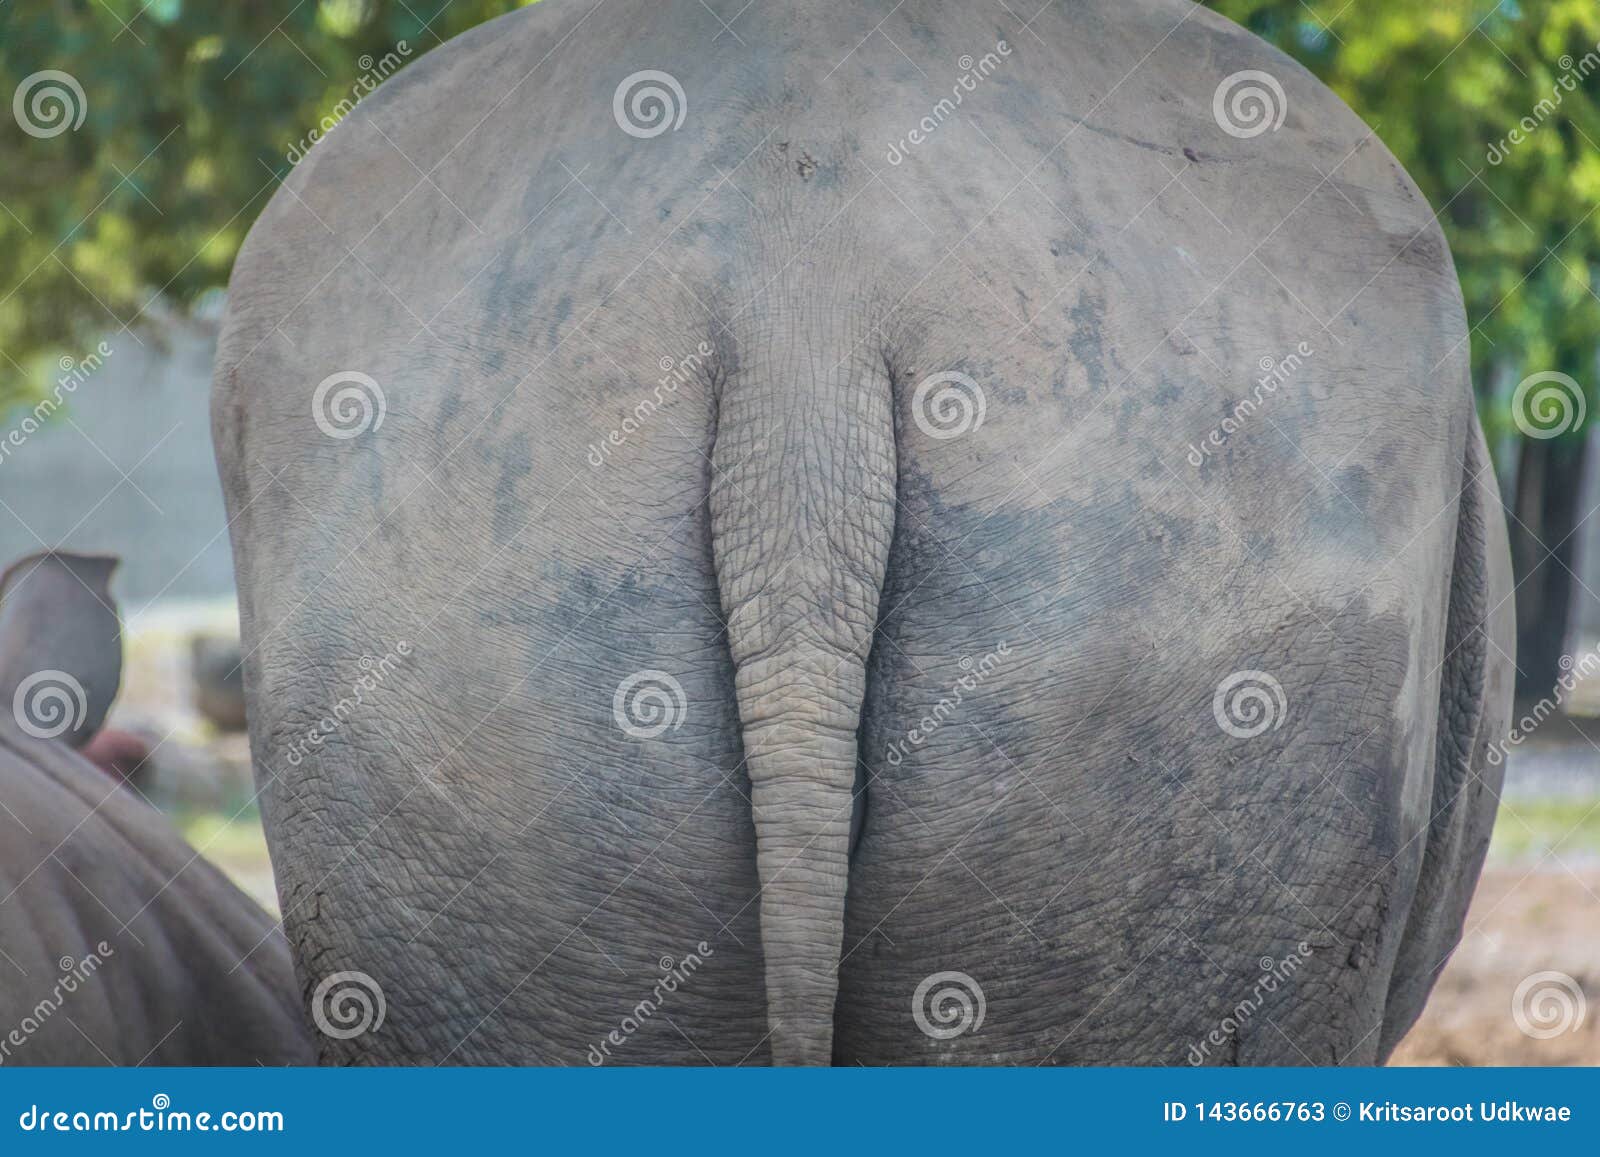 носорогу в жопе голова фото 38